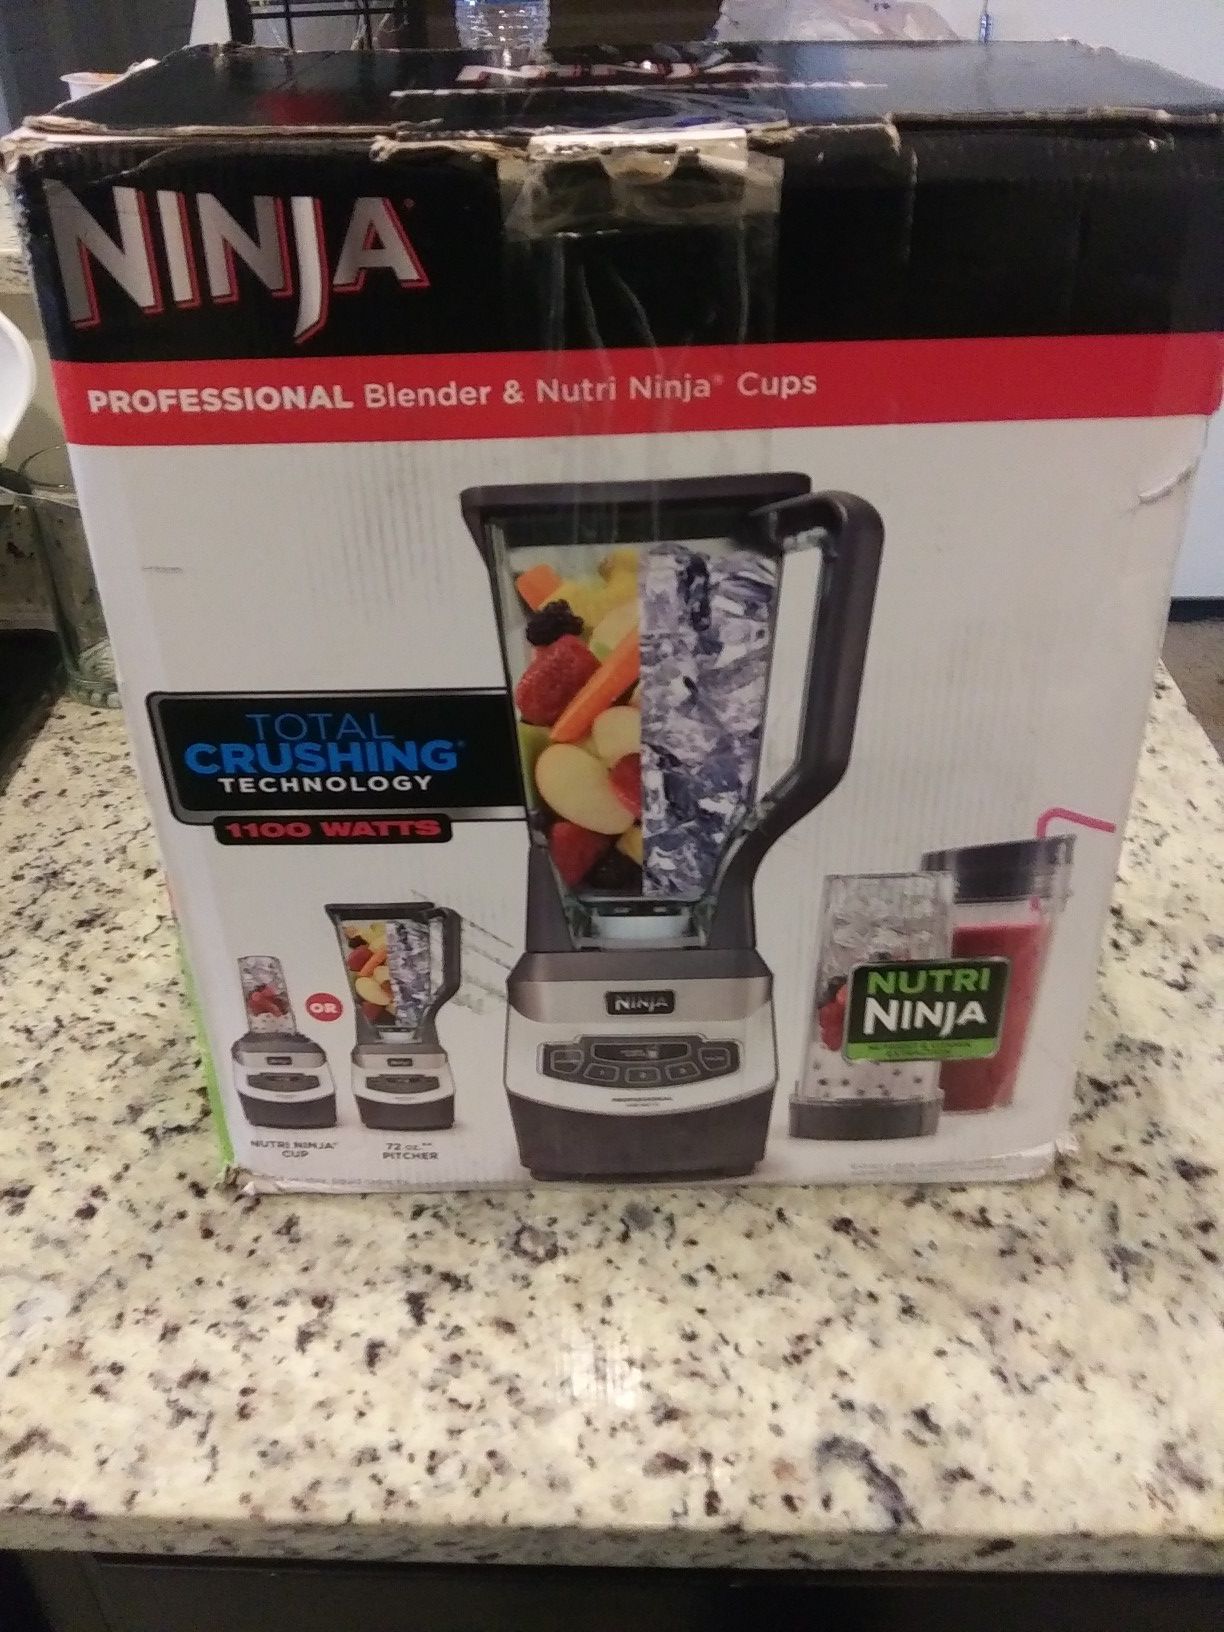 Ninja professional blender